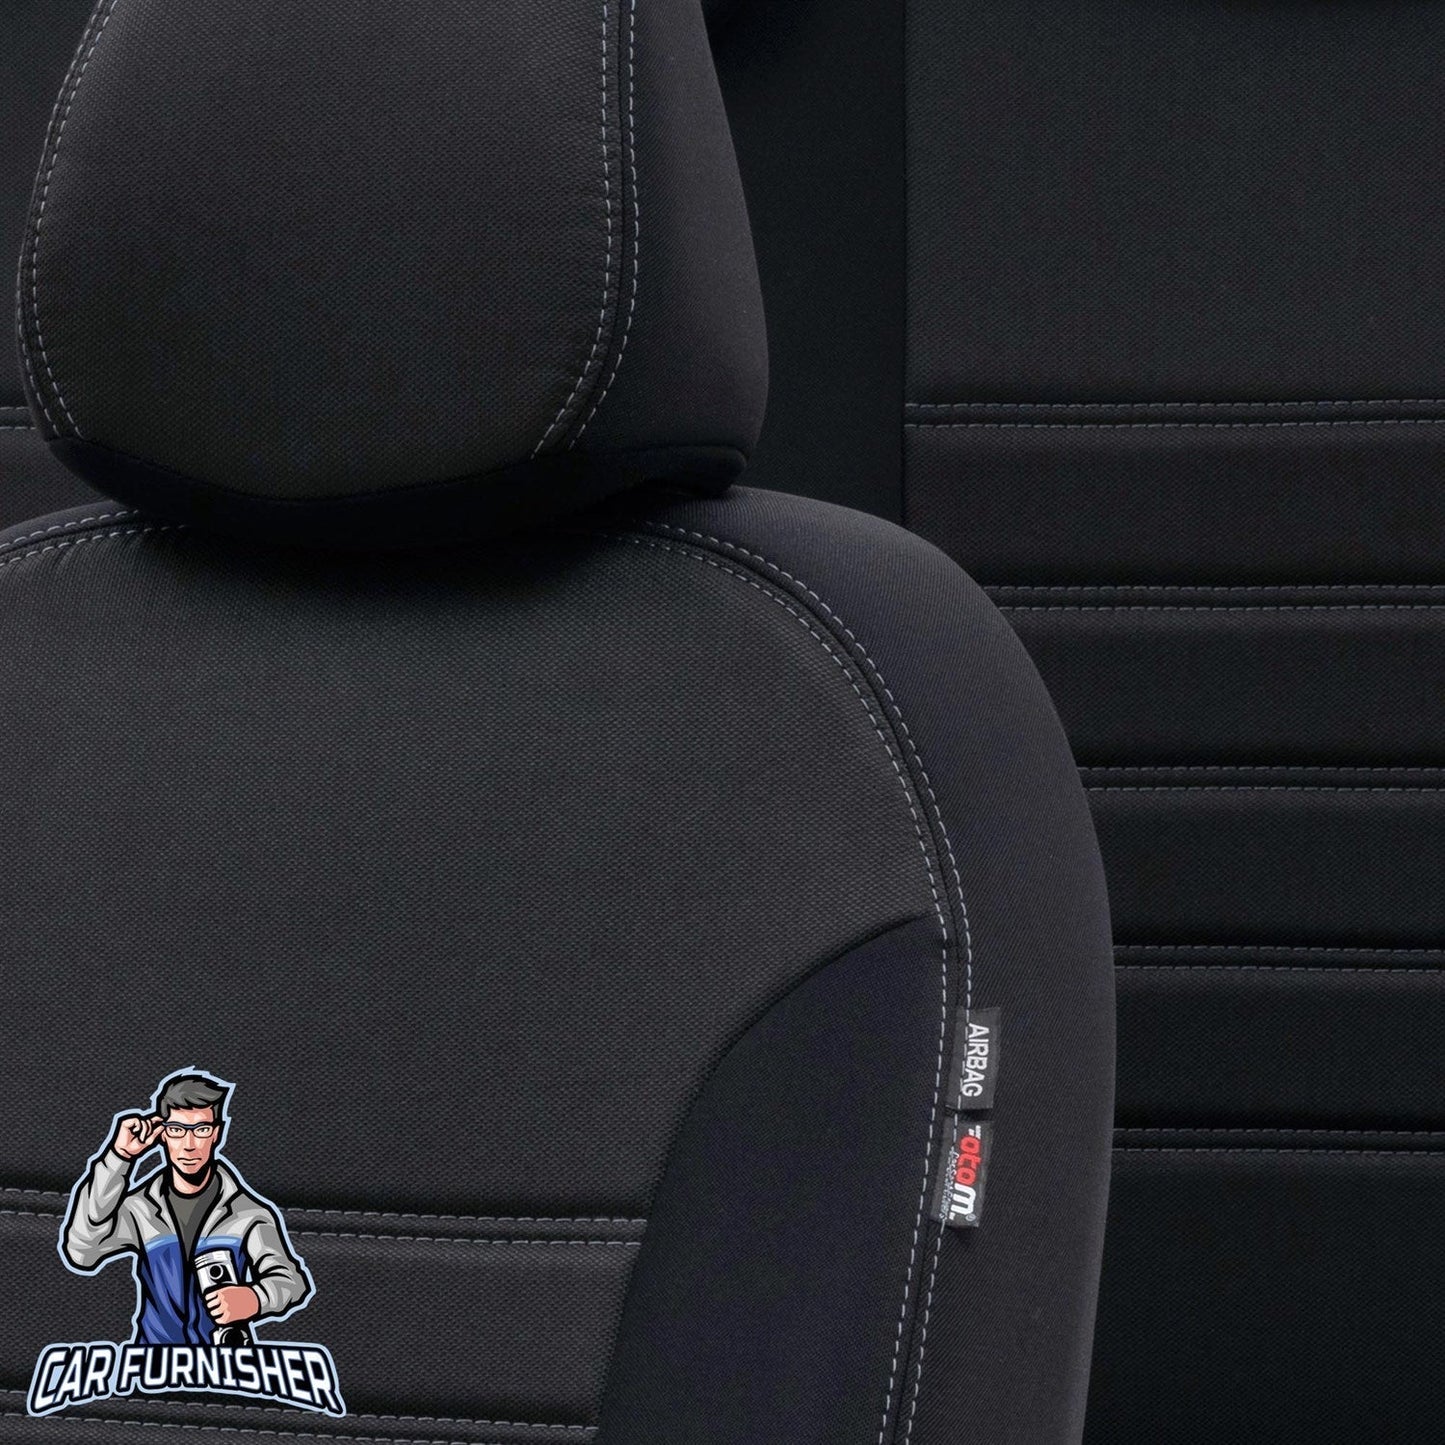 Skoda Kodiaq Seat Covers Original Jacquard Design Black Jacquard Fabric